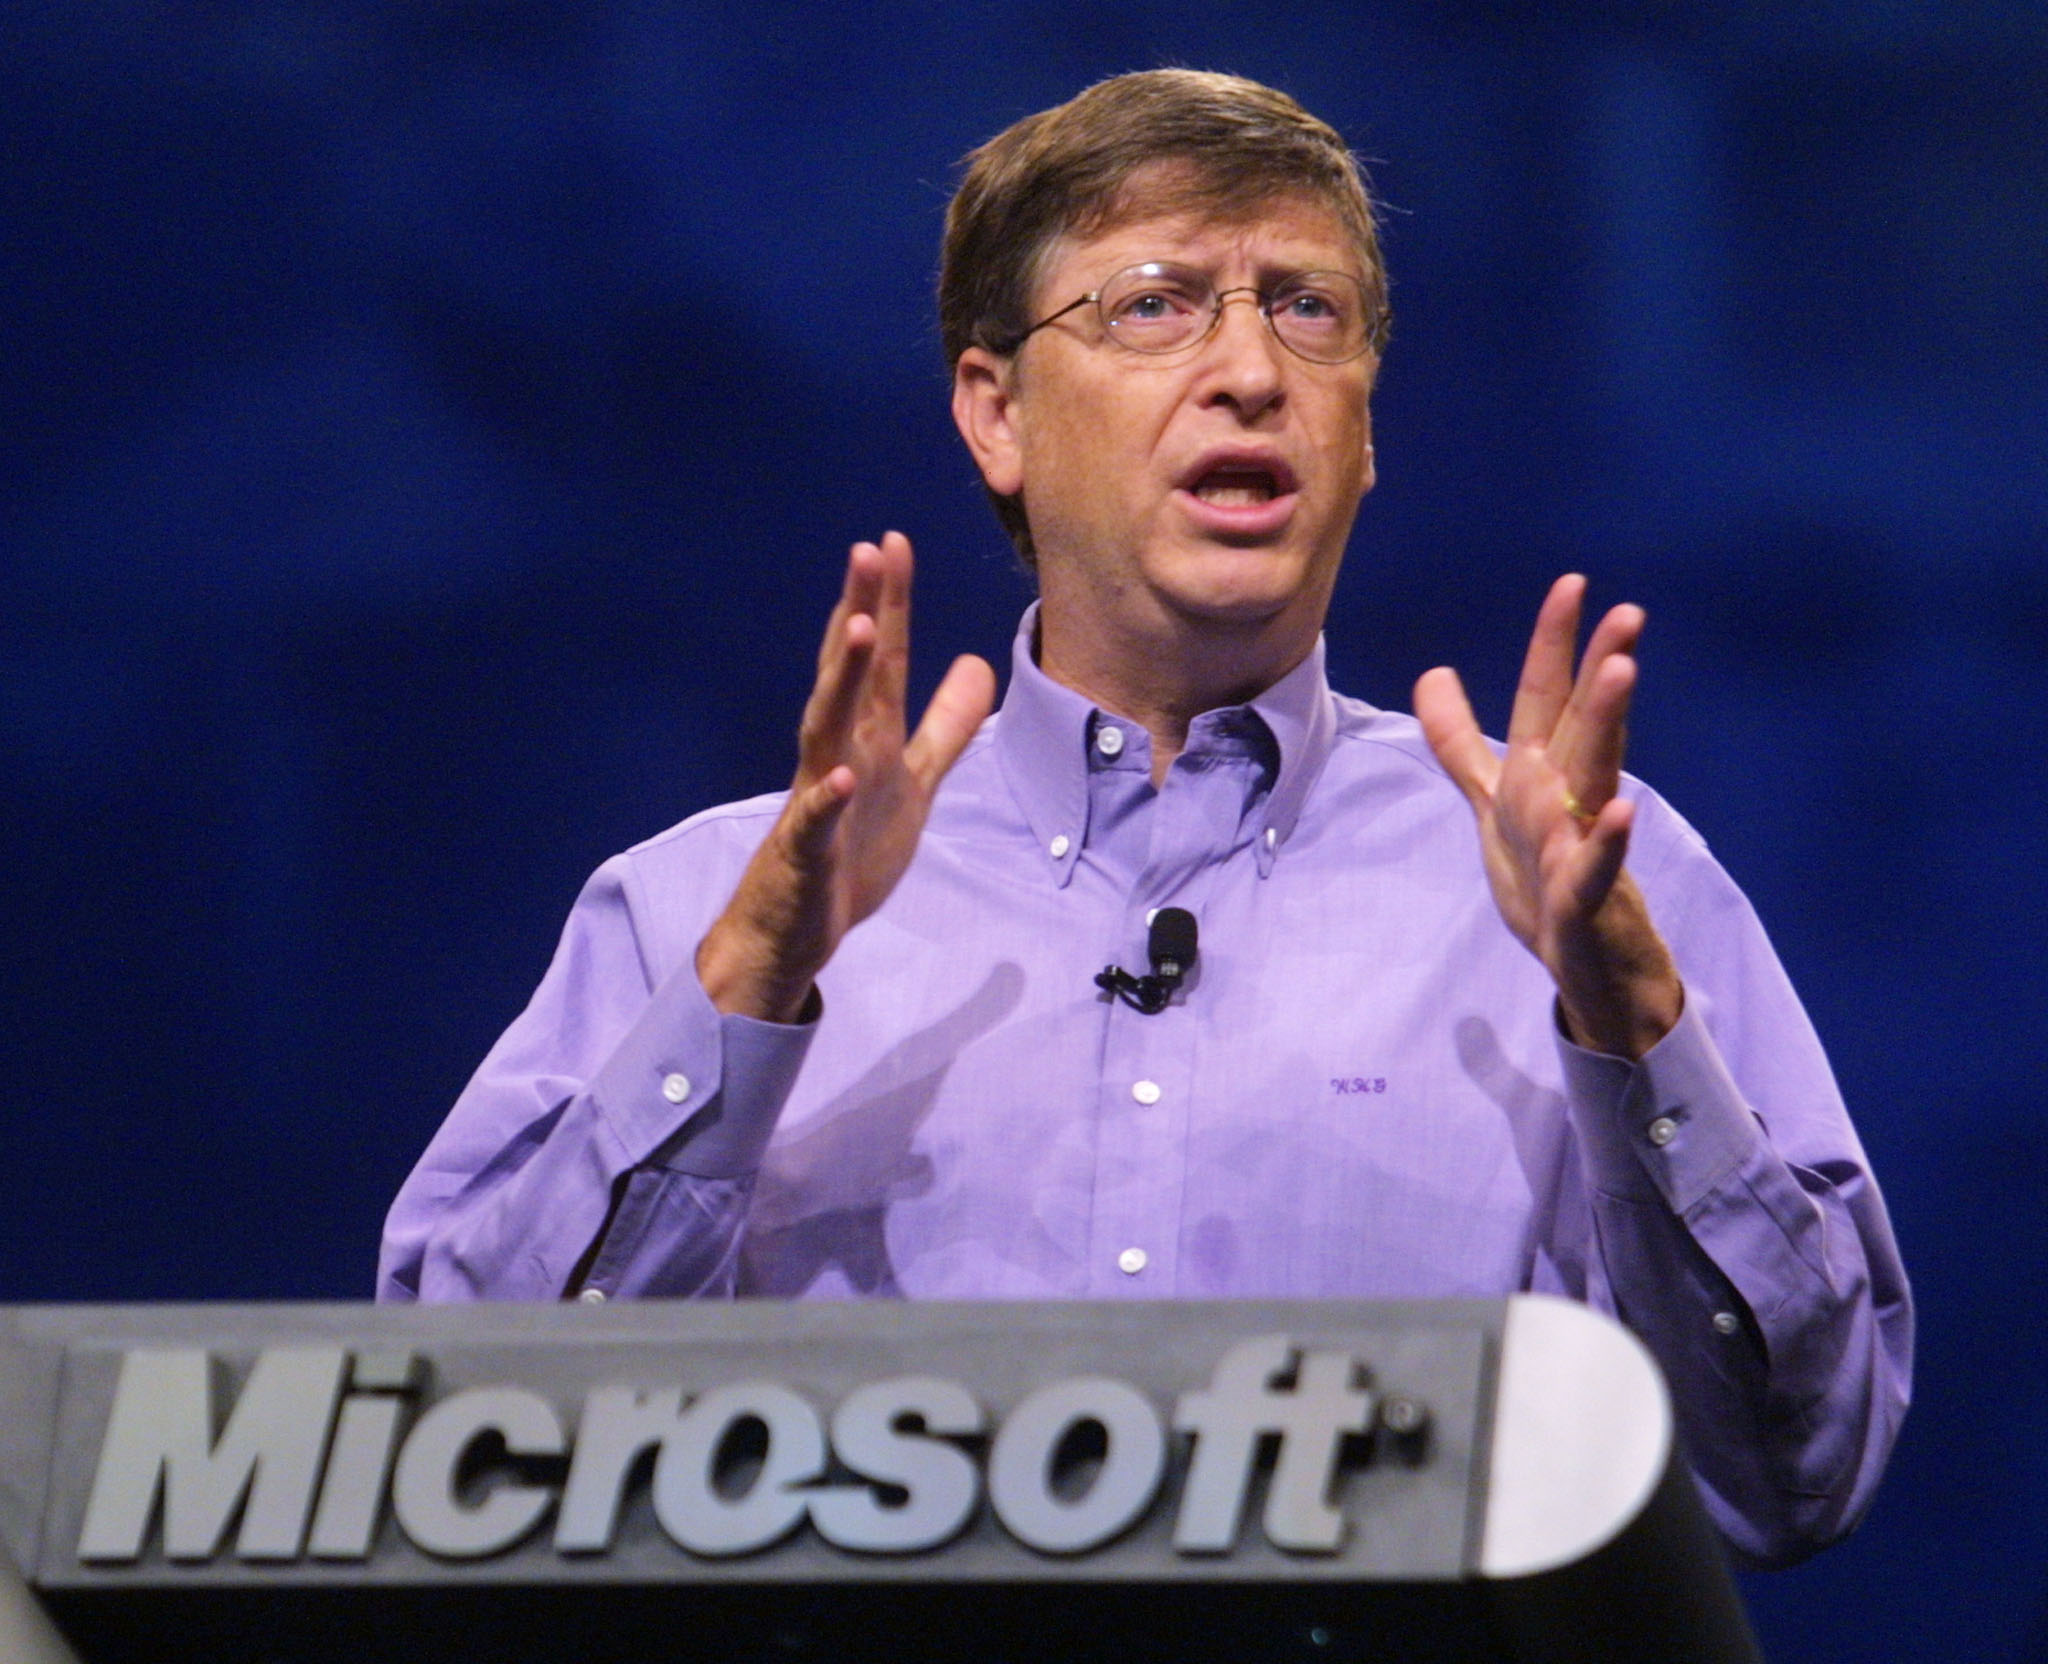 Bill Gates’s Hidden Dreams of Geoengineering Revealed